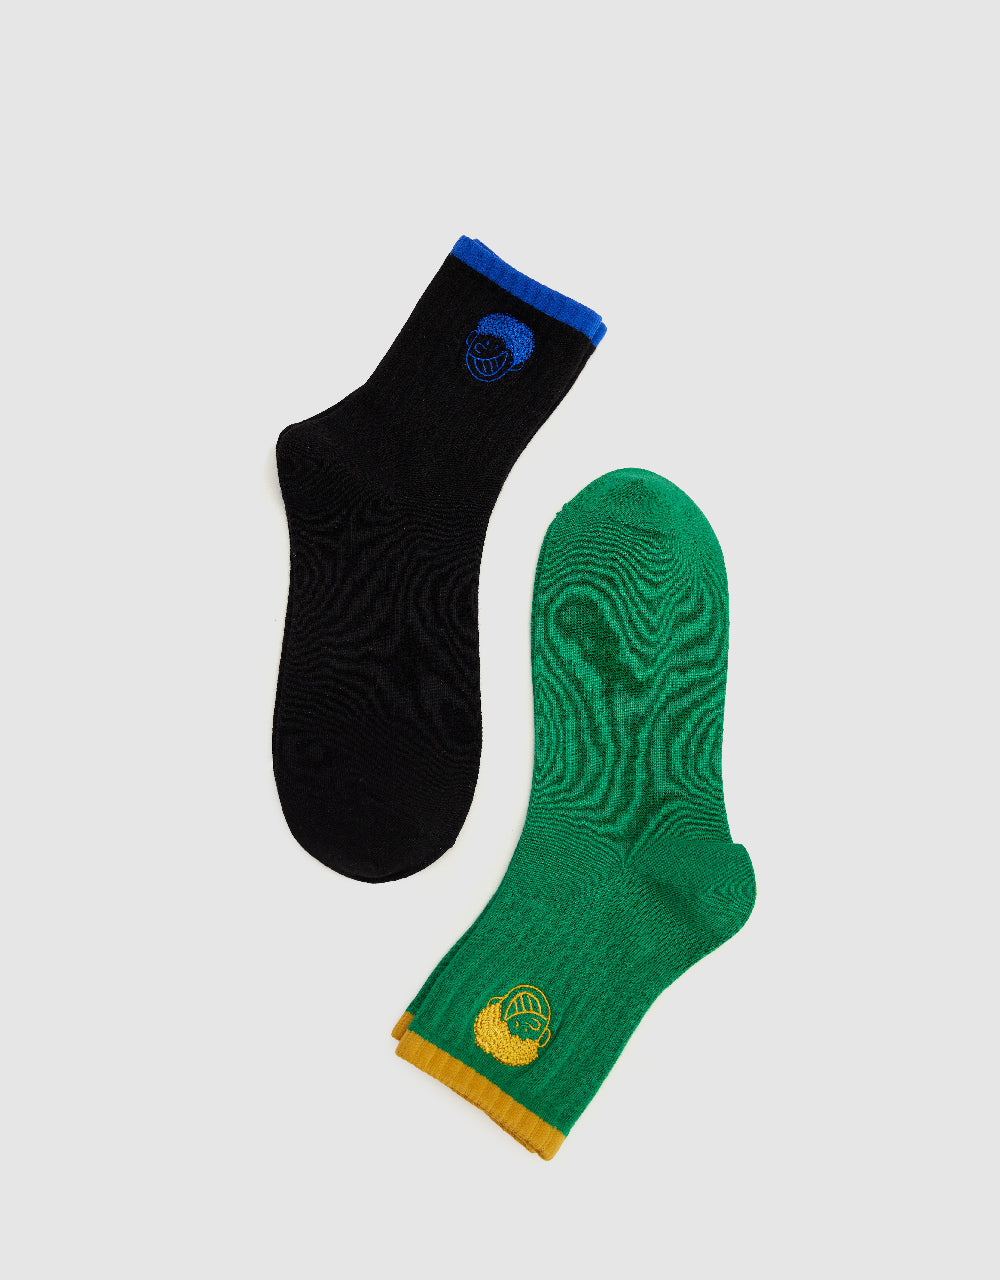 Two Toned Mid-Length Socks